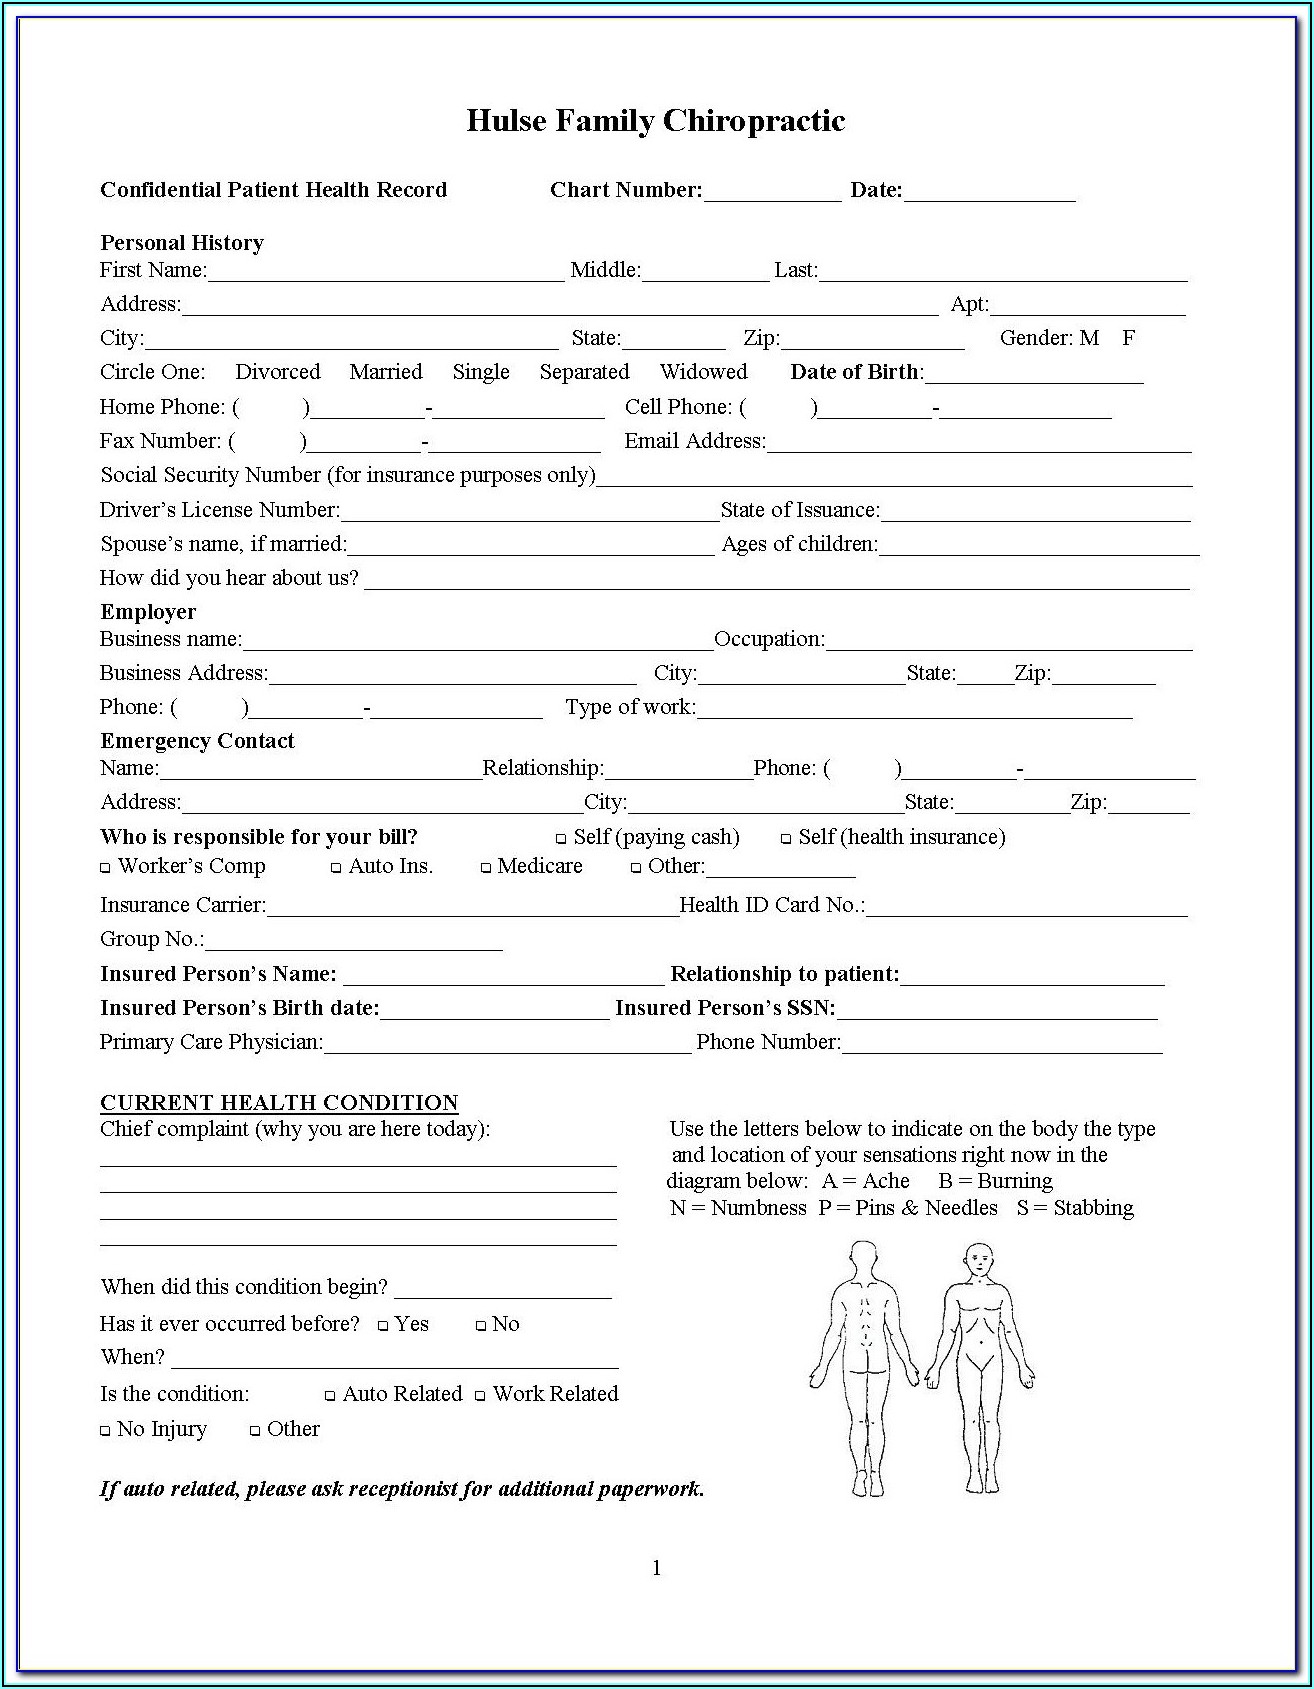 humalog-patient-assistance-form-form-resume-examples-djvajxdd2j